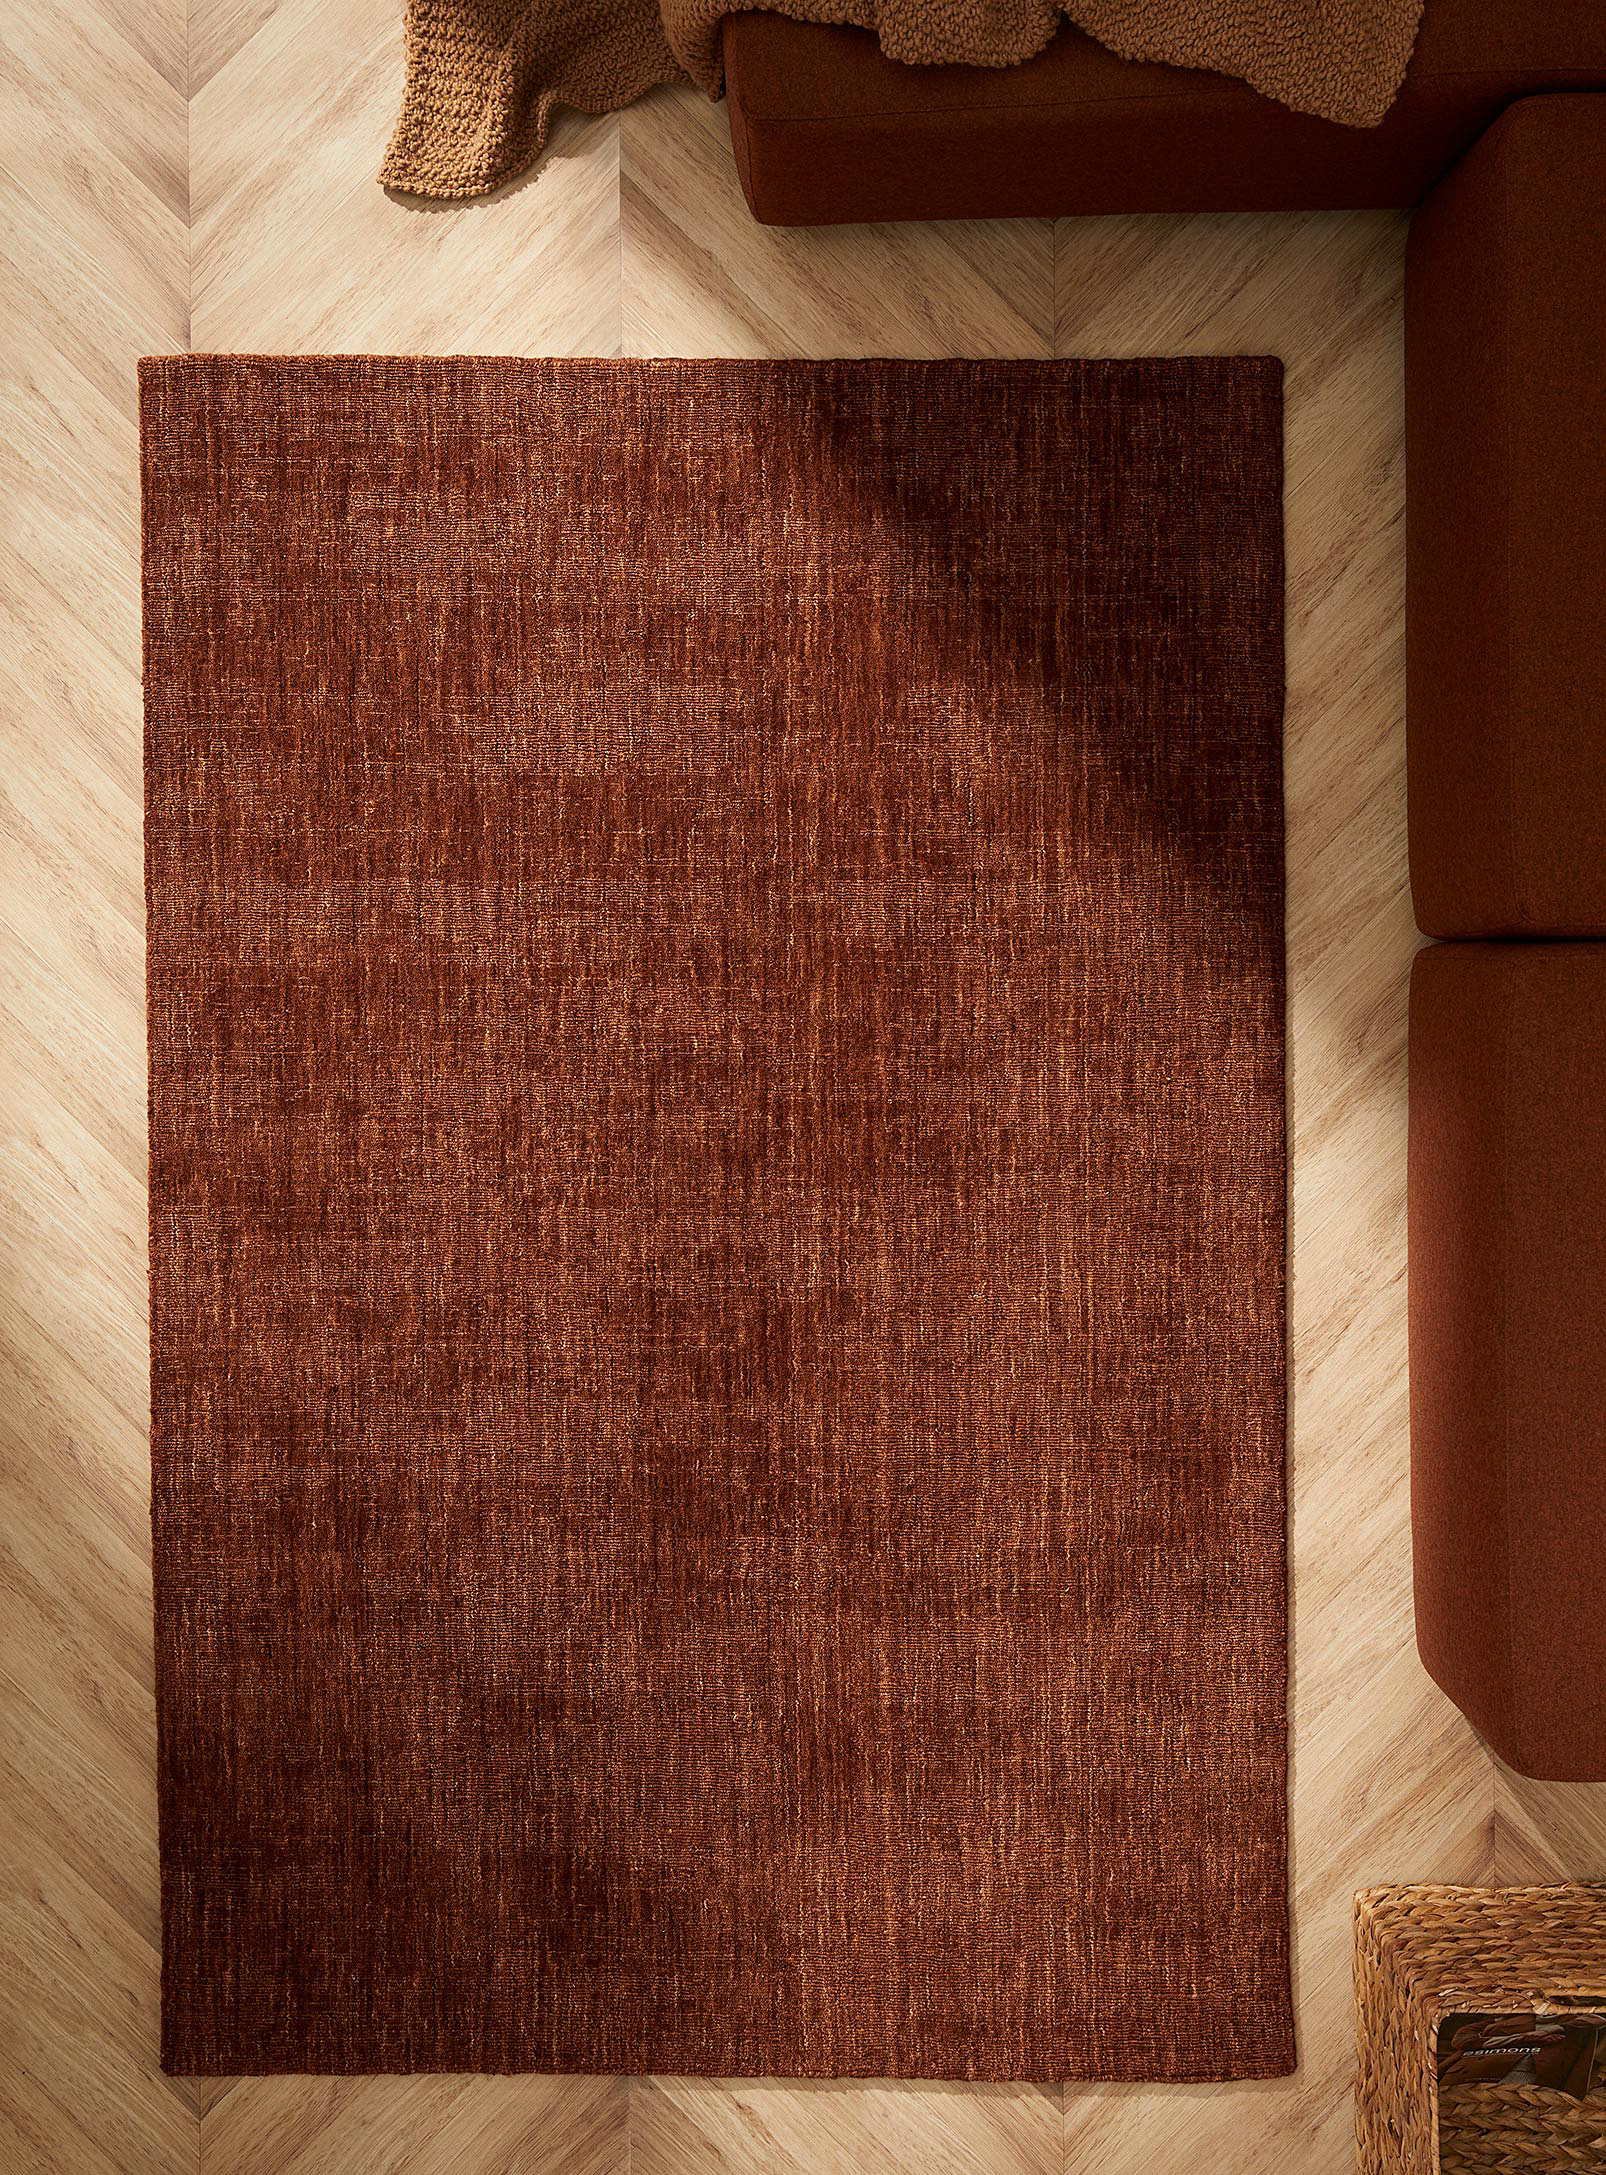 Simons Maison Heathered Wool Artisanal Rug 120 X 180 Cm In Brown